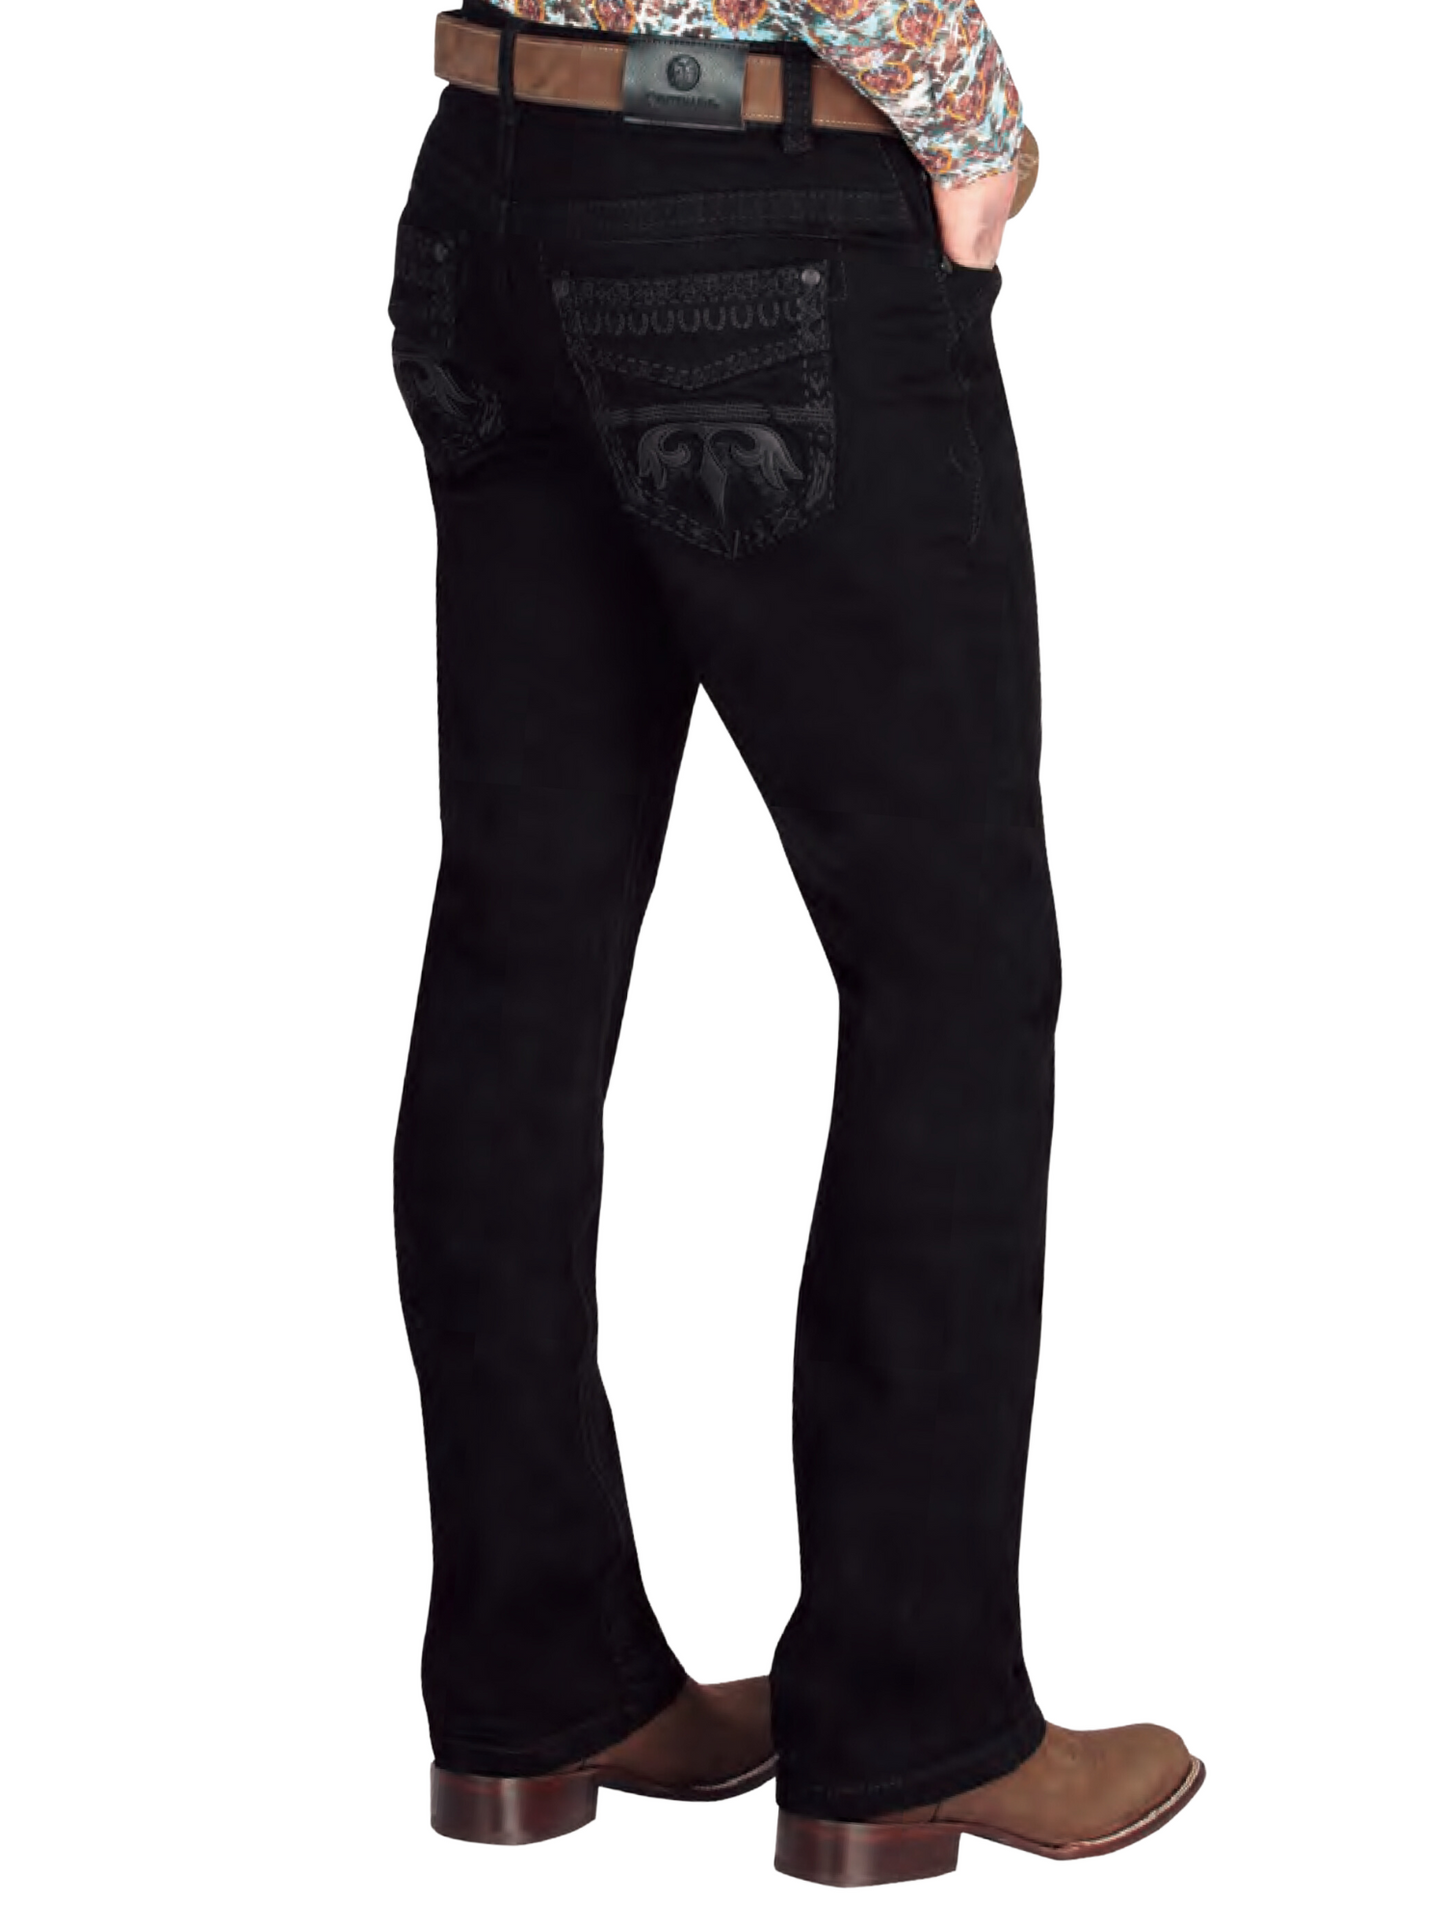 Pantalon Vaquero de Mezclilla Boot Cut Negro para Hombre 'Centenario' - ID: 44834 Denim Jeans Centenario 